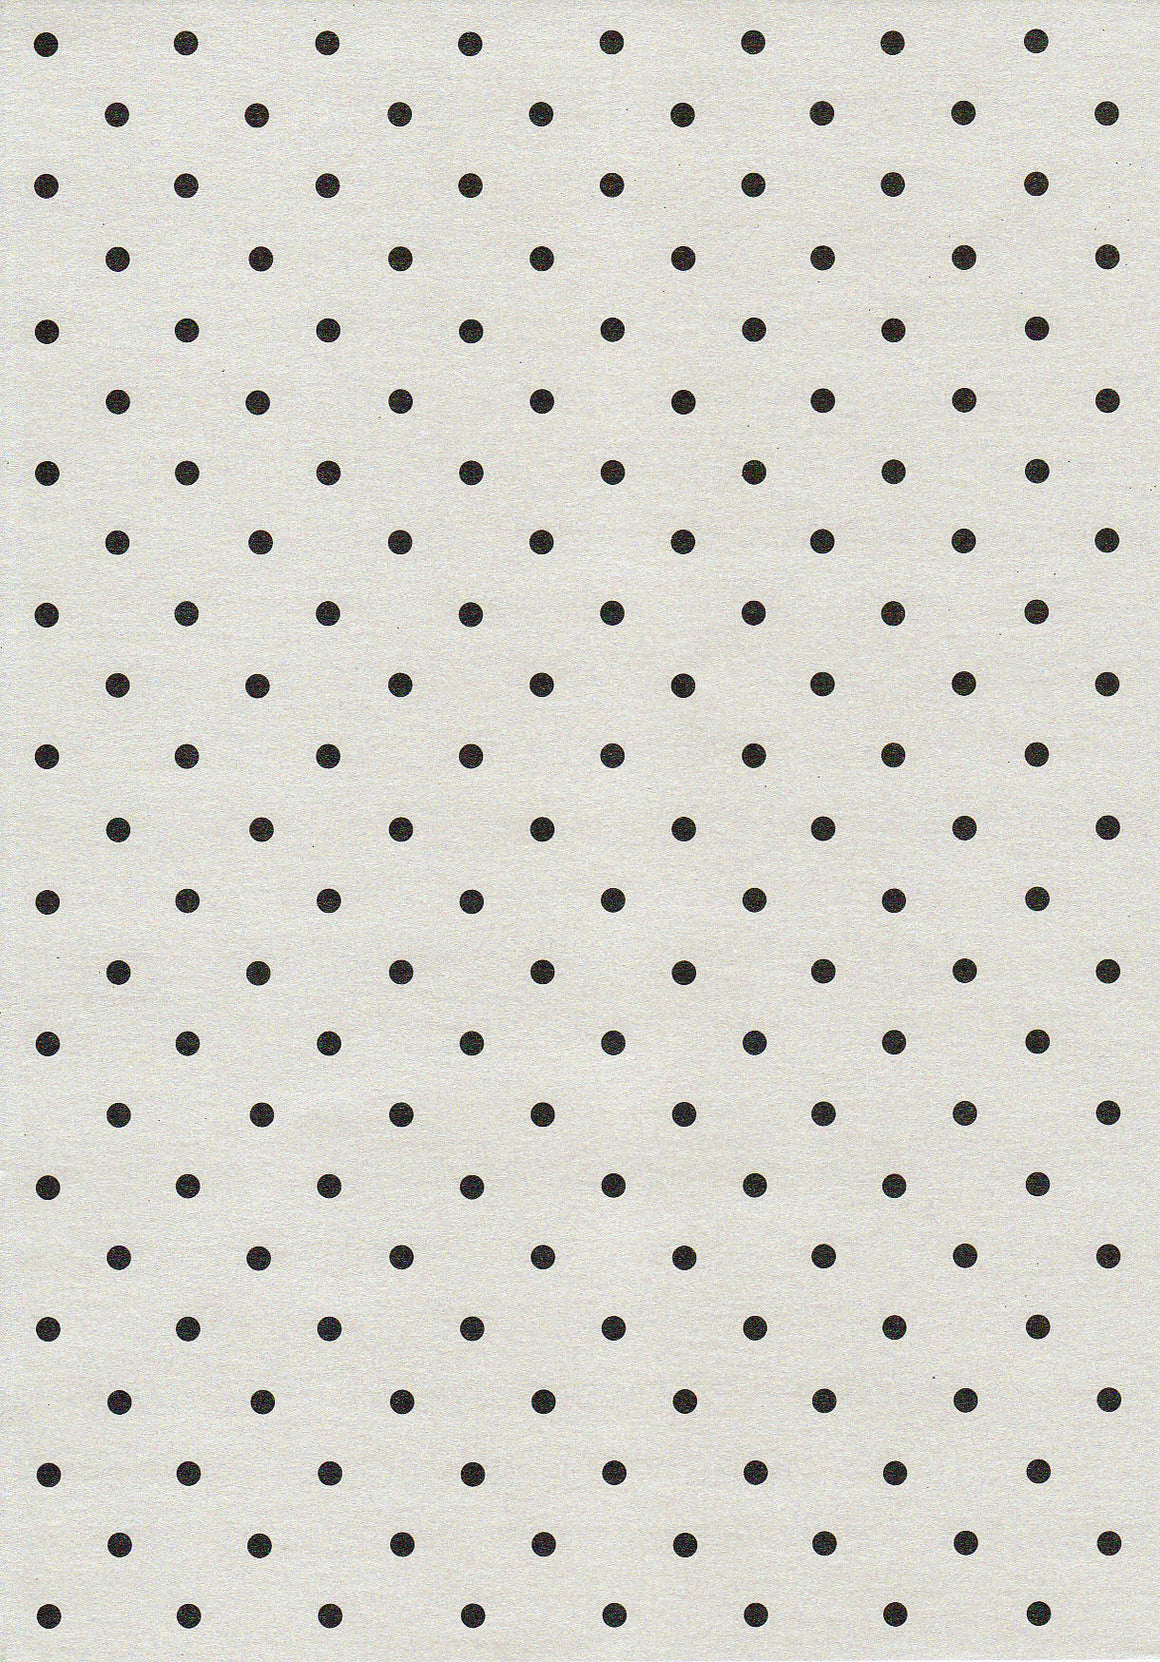 Black Polka Dots on White A4 Paper